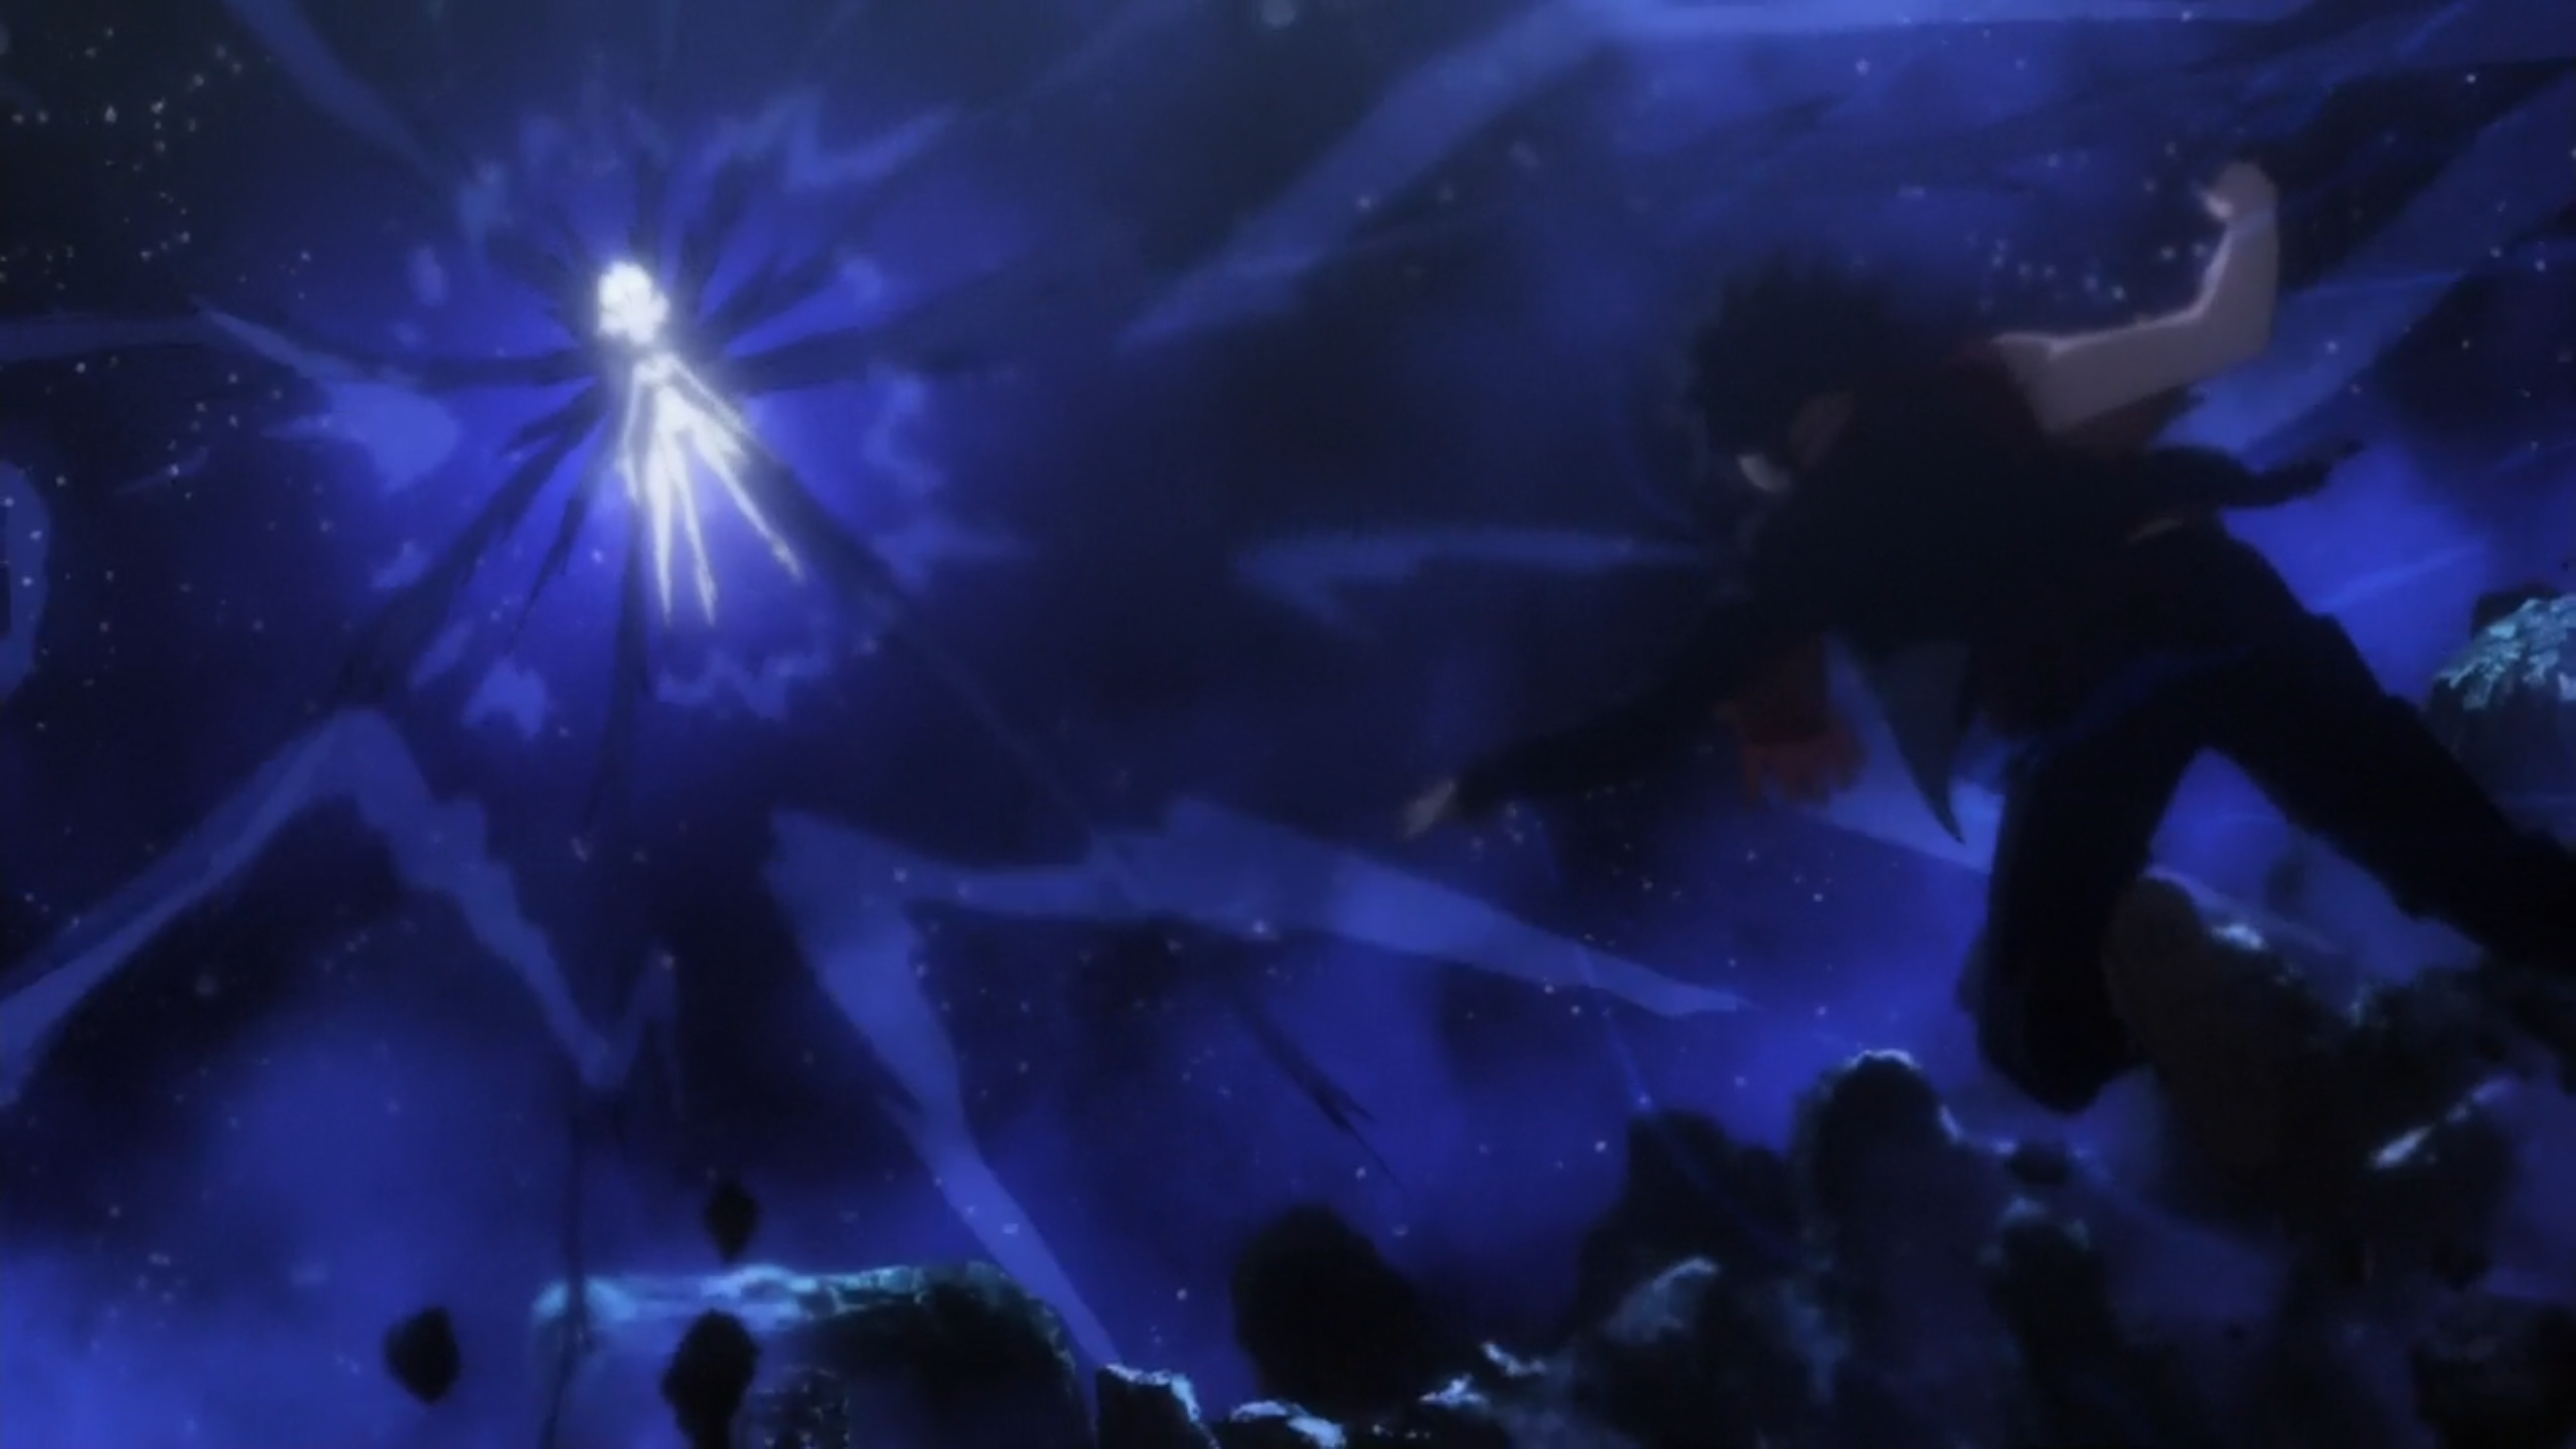 Toaru Majutsu no Index Season 3 Episode 20 Preview Screenshot! Accelerator's  New Black Wings! : r/toarumajutsunoindex